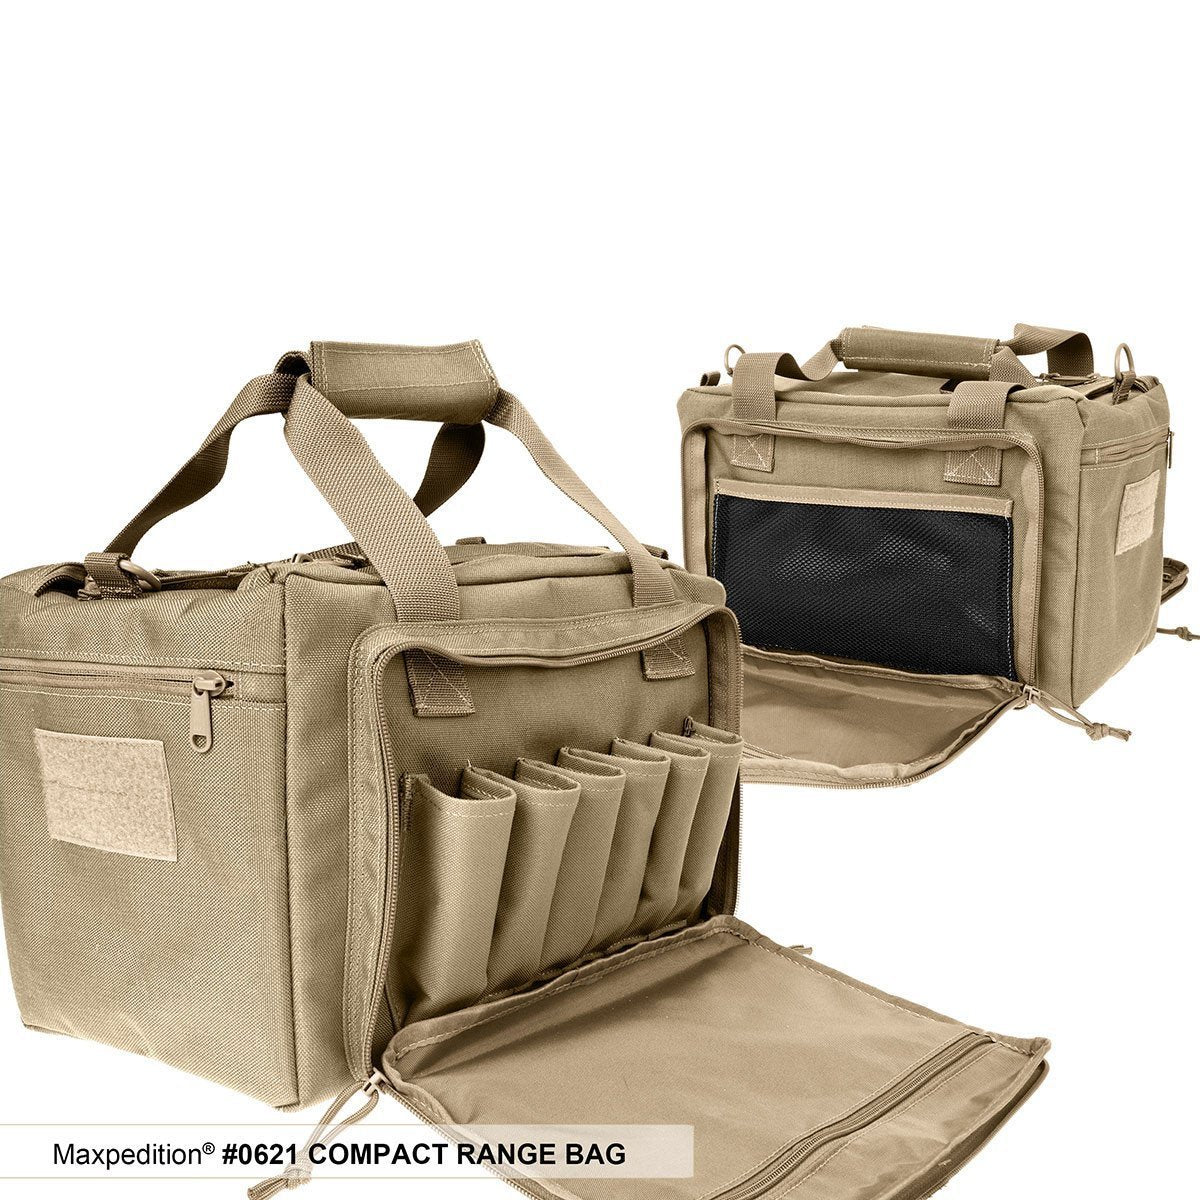 Maxpedition Compact Range Bag Special deal!